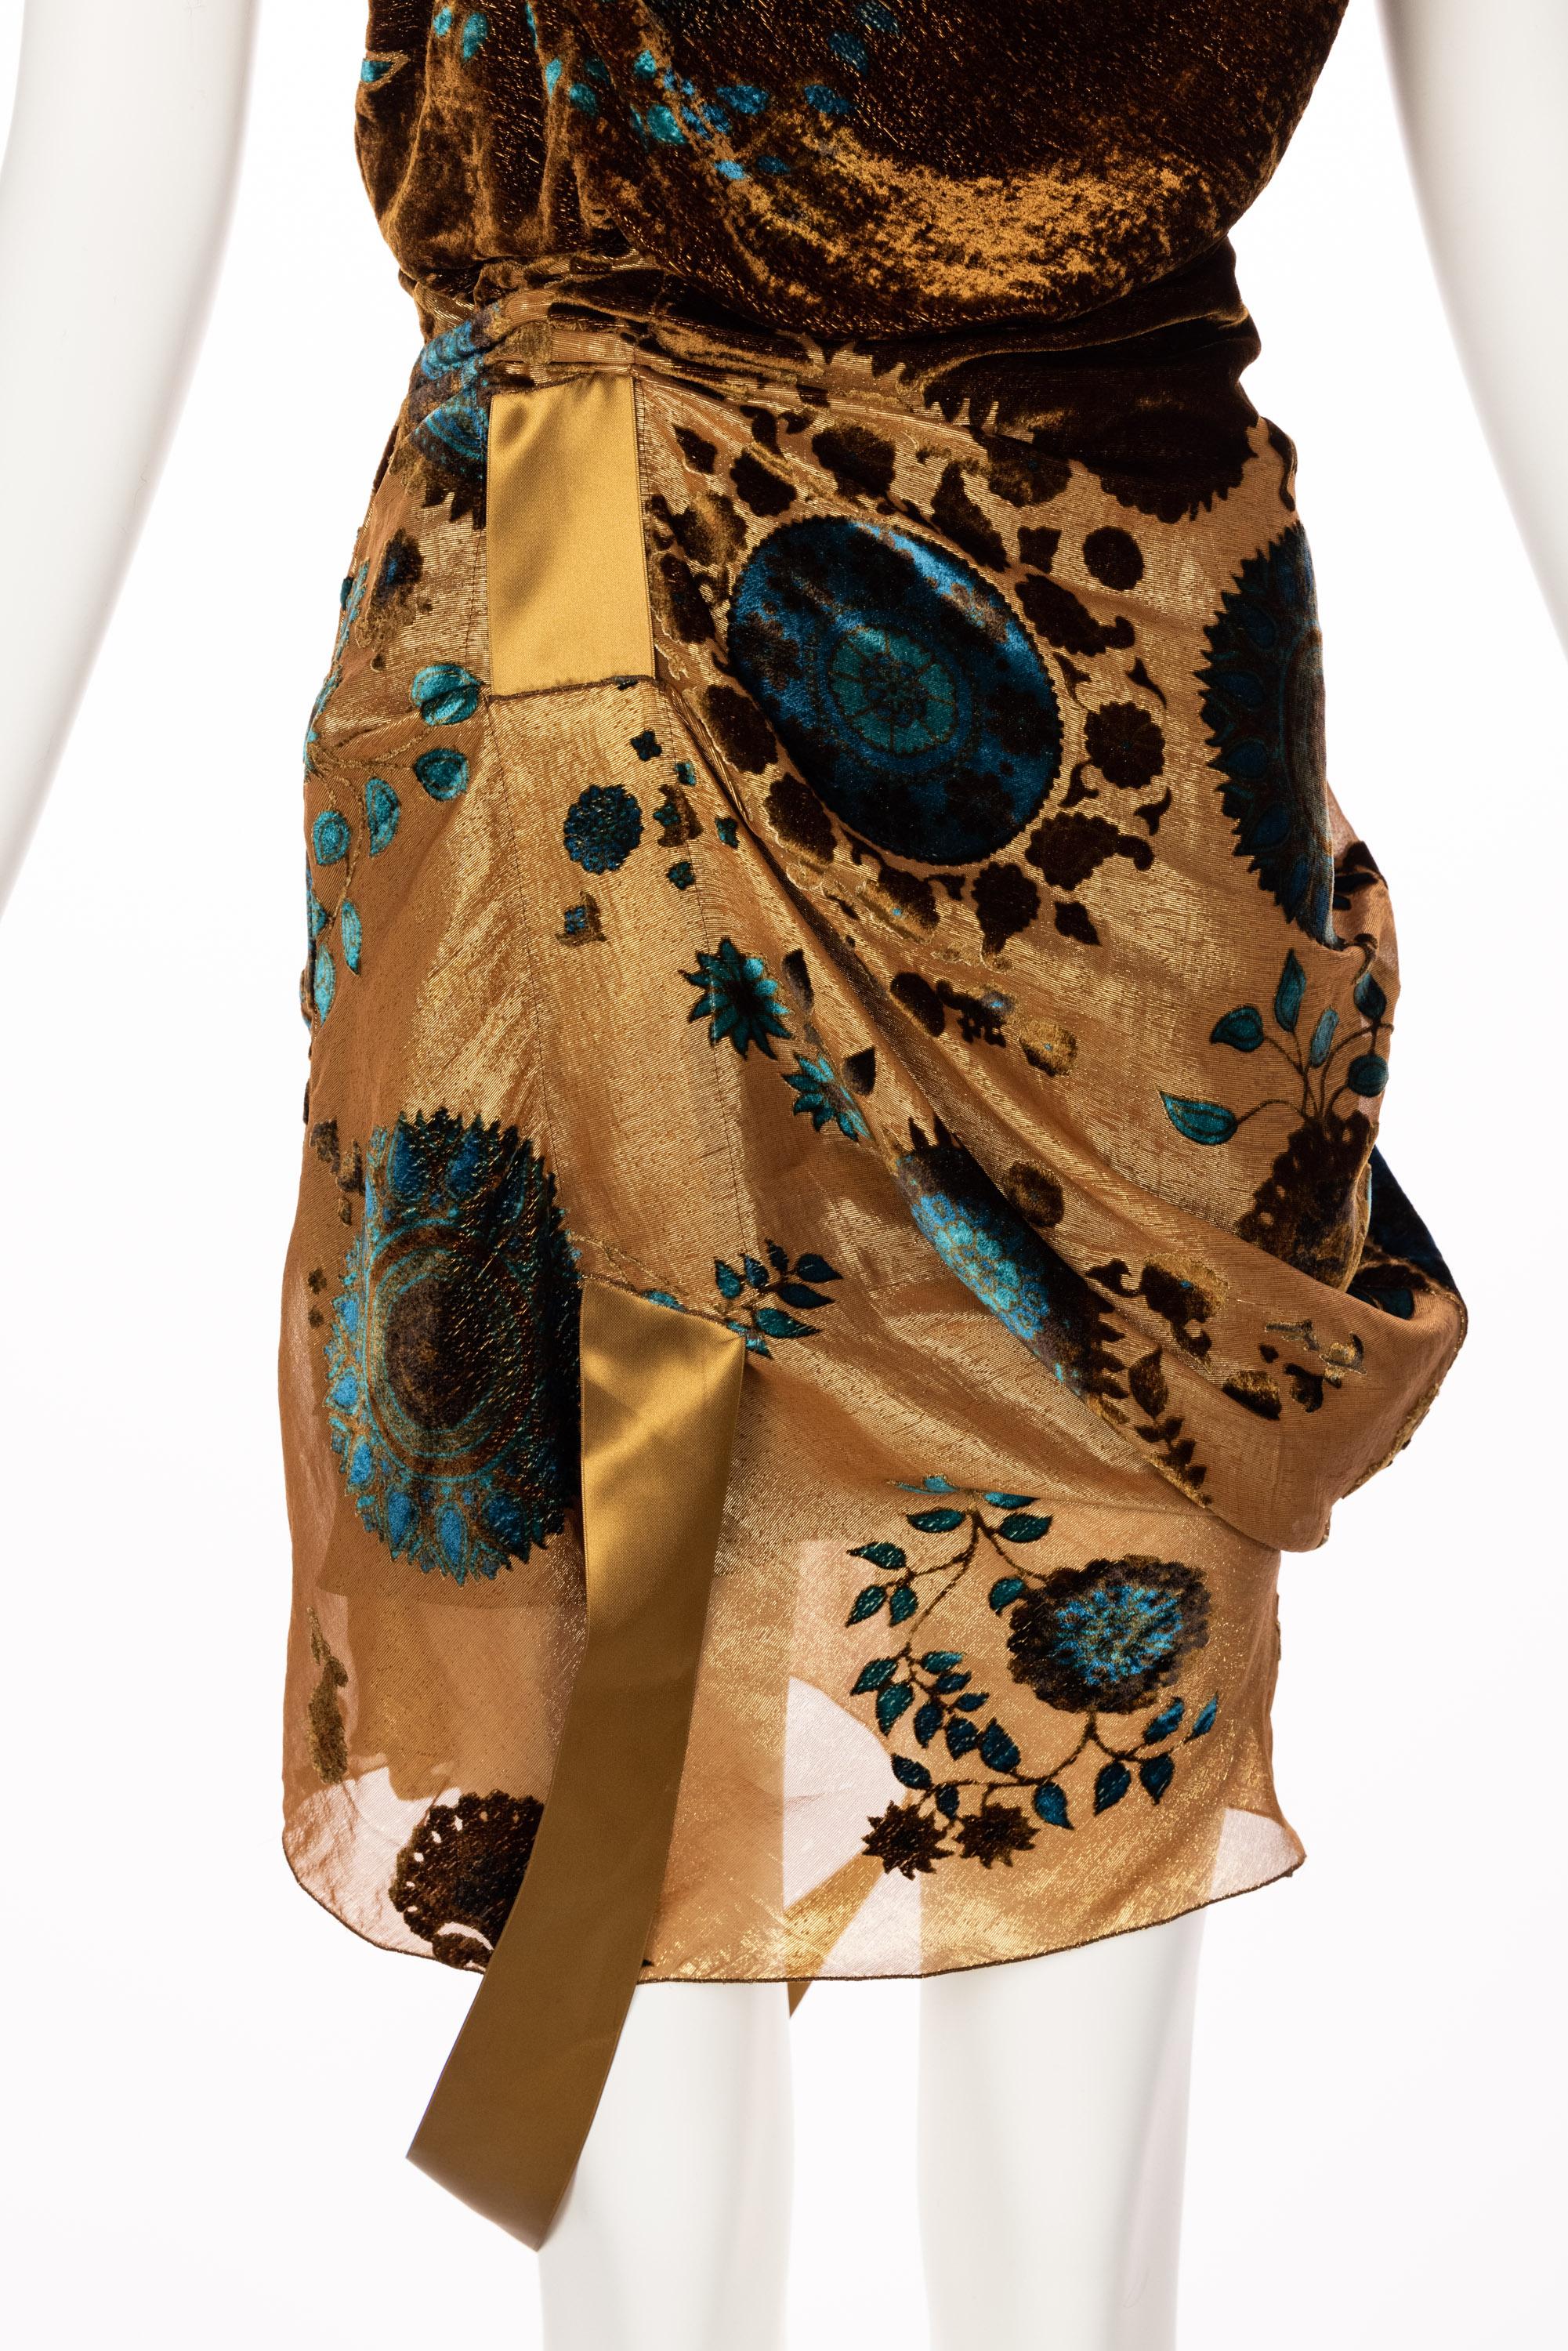  Christian Dior Galliano Golden Brown Turquoise Velvet Floral Devore Dress 2005 4